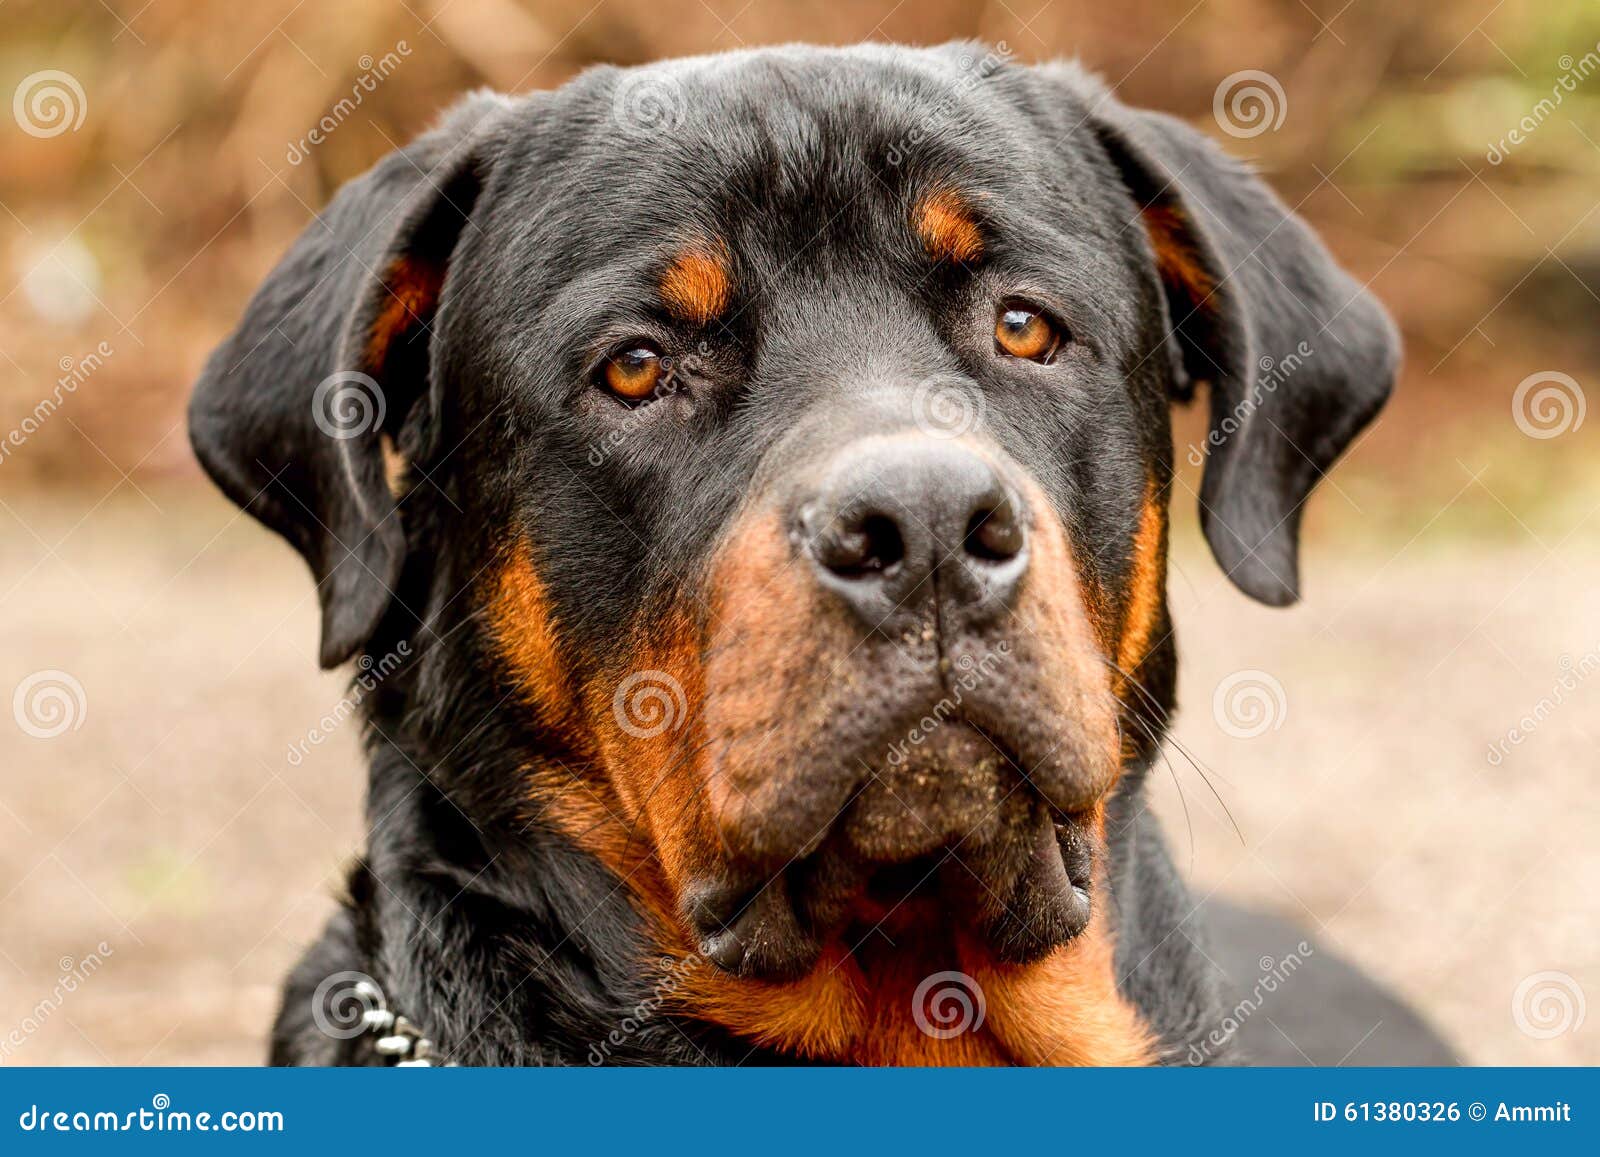 frontal rottweiler dog portrait